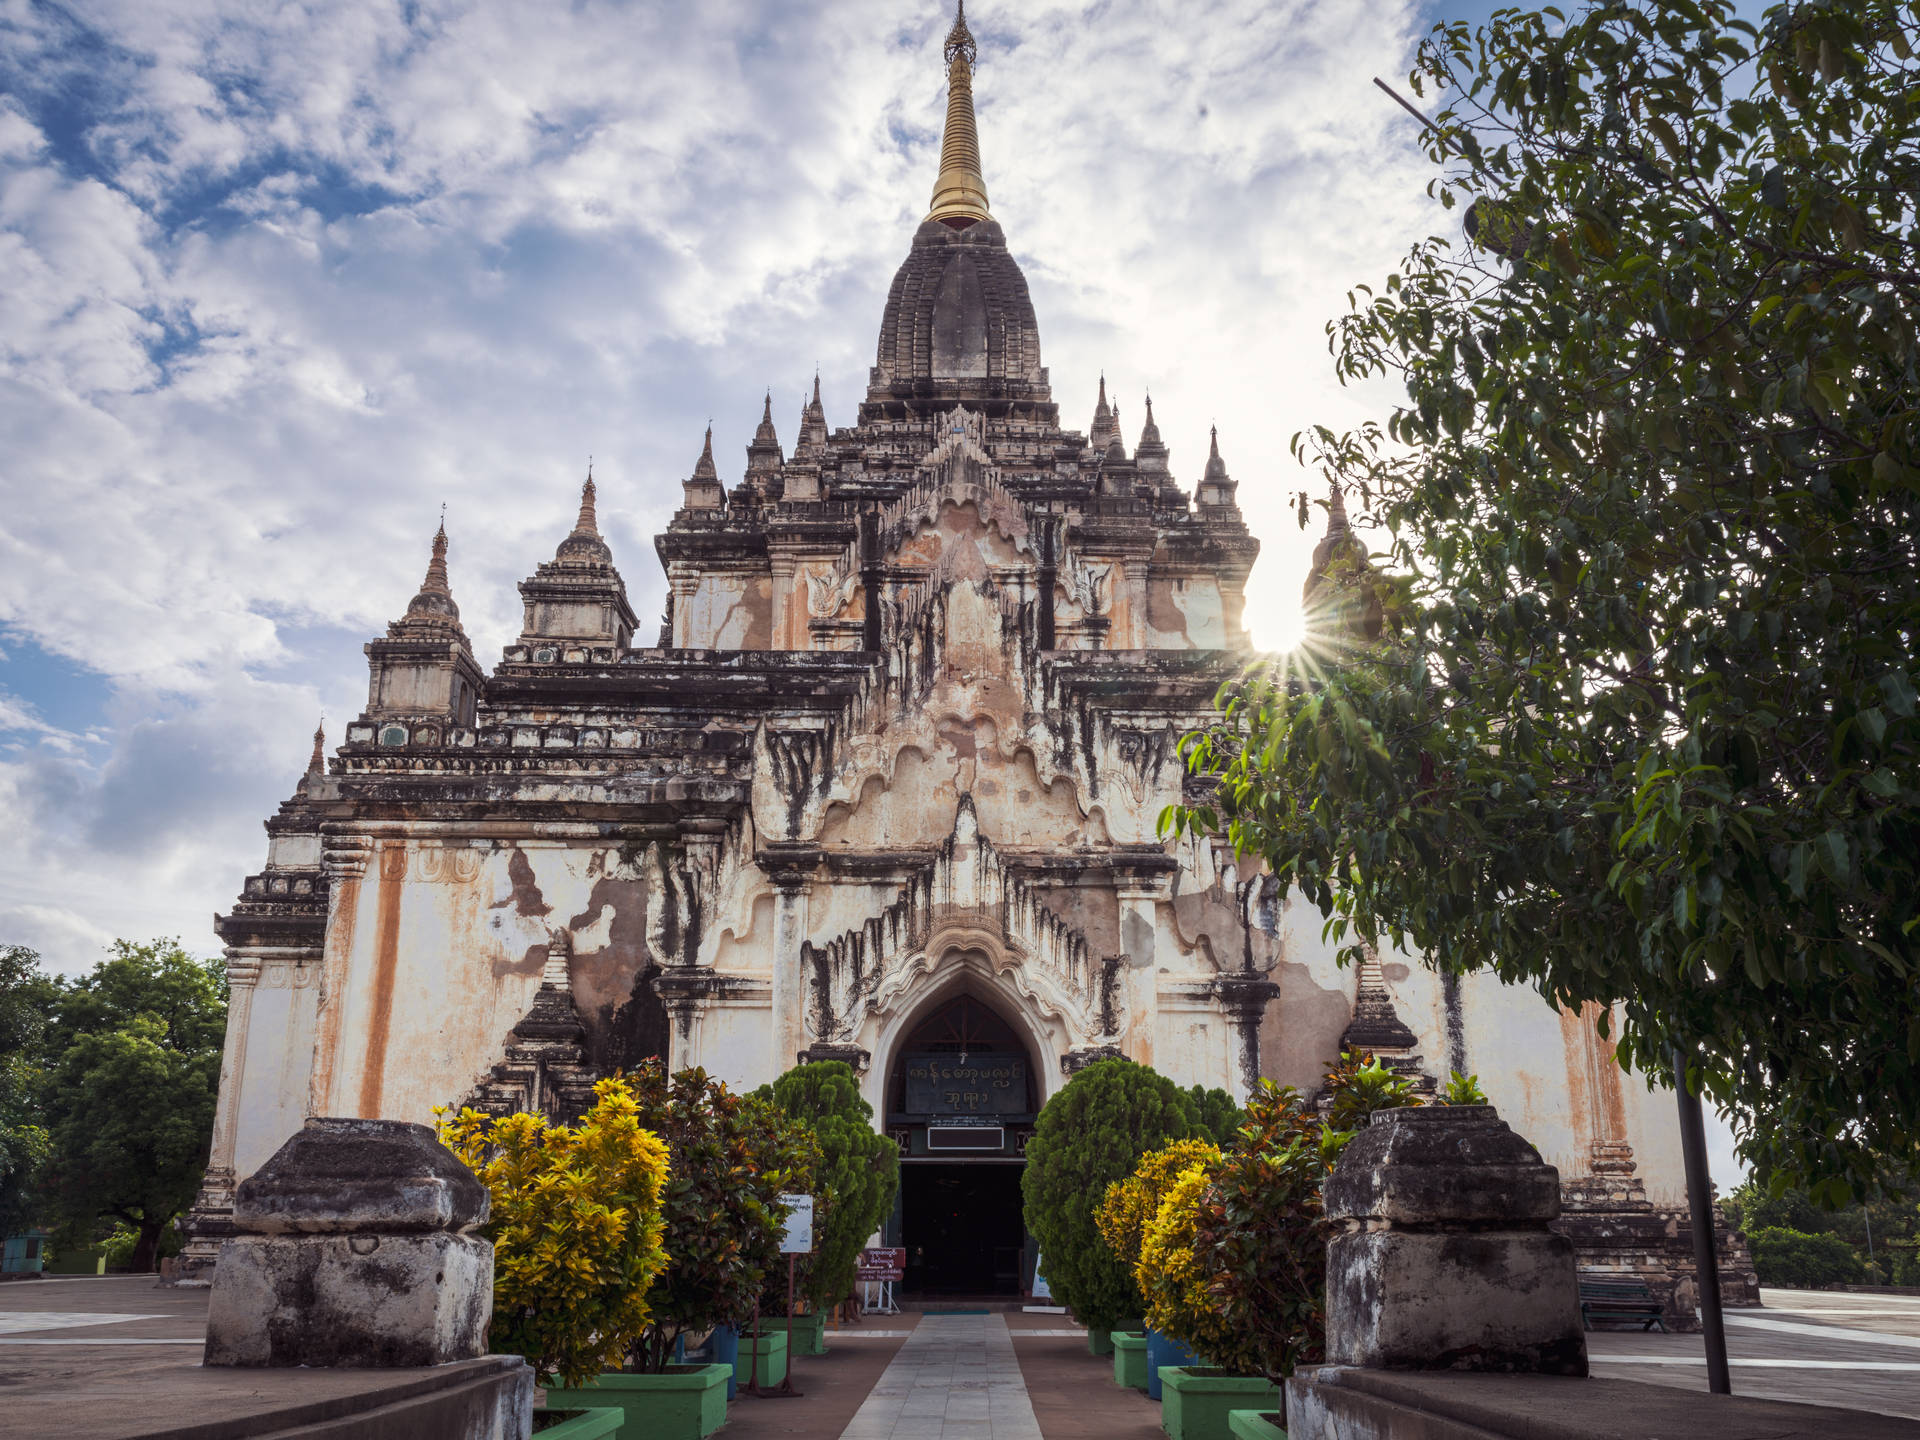 Gawdawpalin Temple Burma